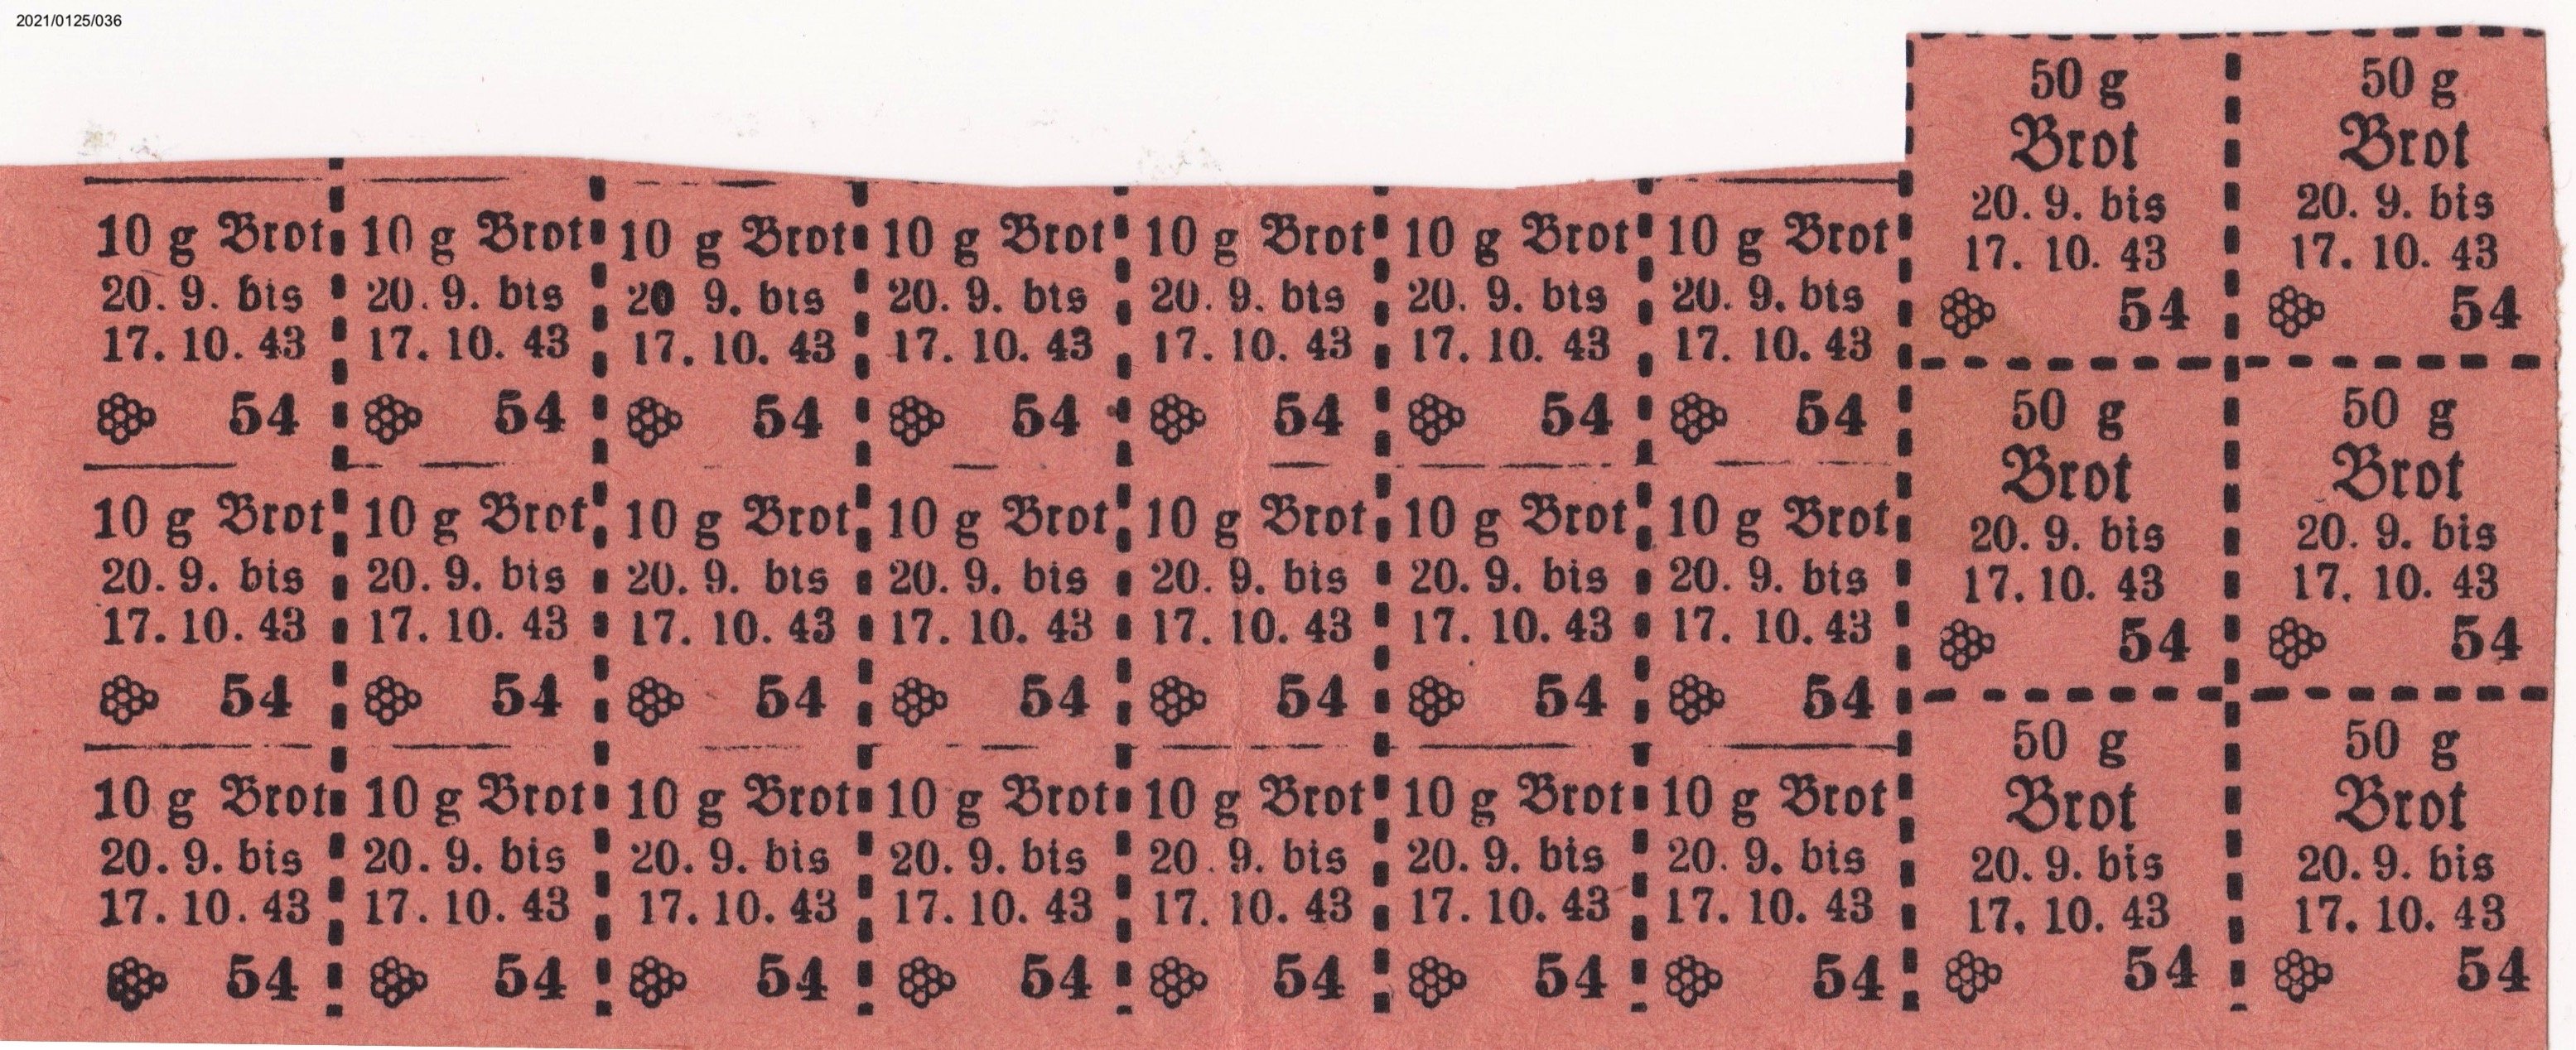 Lebenmittelmarke für 10g und 50g Brot 1933 (Museumsgesellschaft Bad Dürkheim e. V. CC BY-NC-SA)